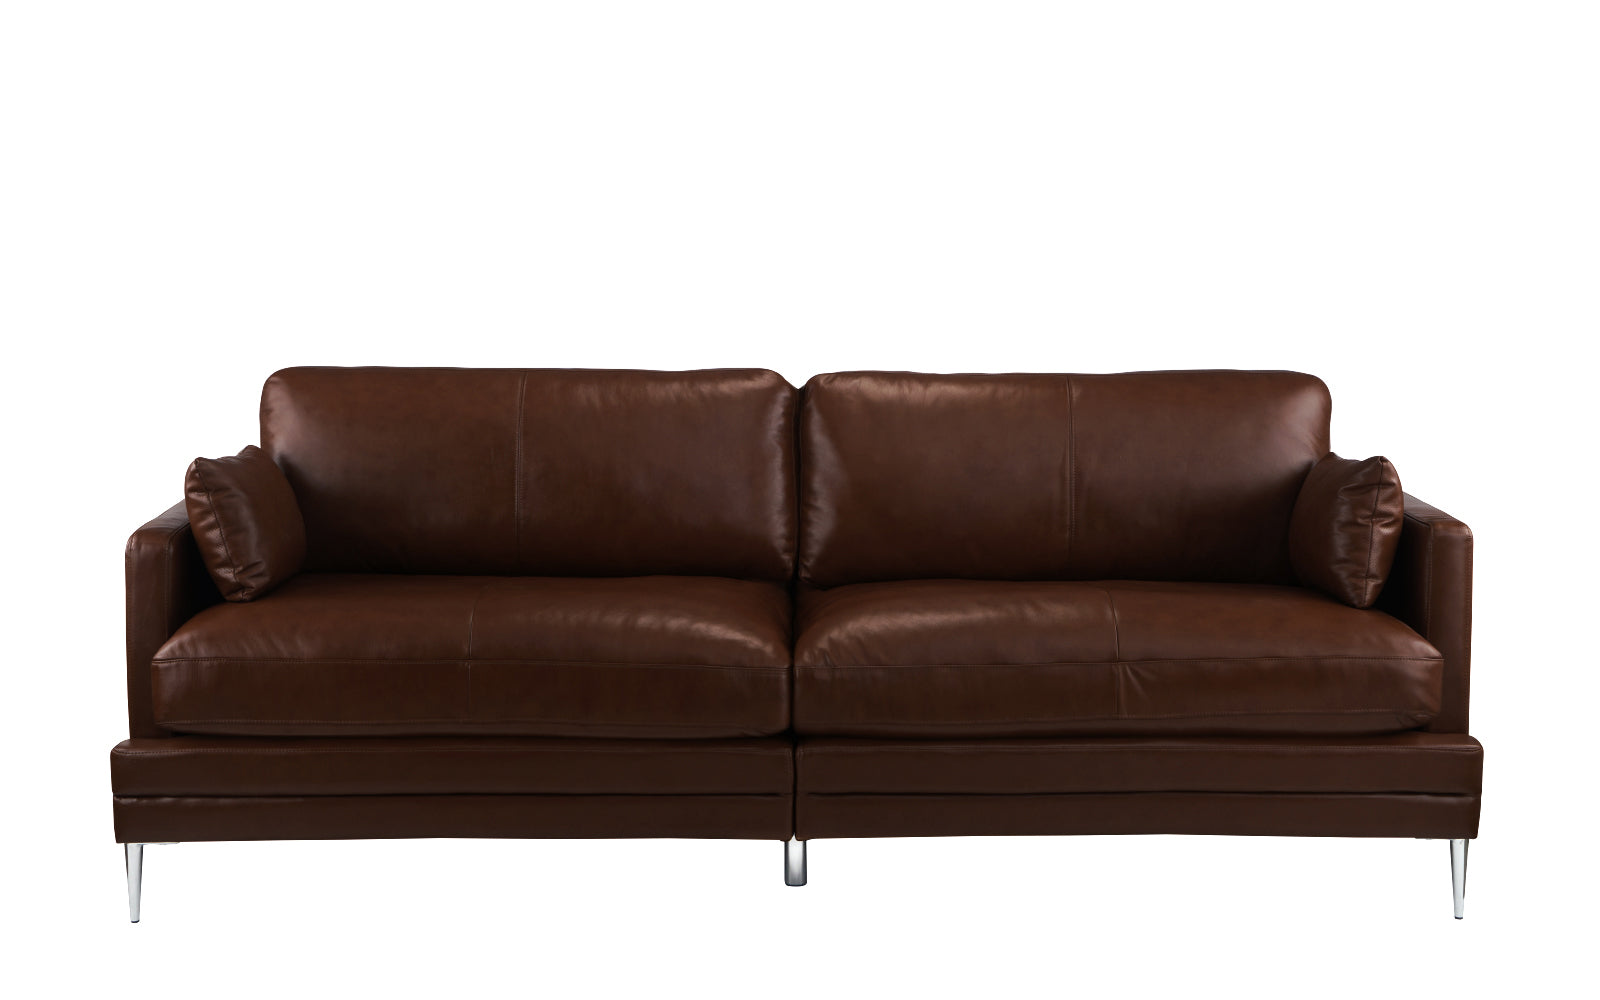 EXP303-DBR Hadrien Mid Century Modern Leather Match Sofa sku EXP303-DBR